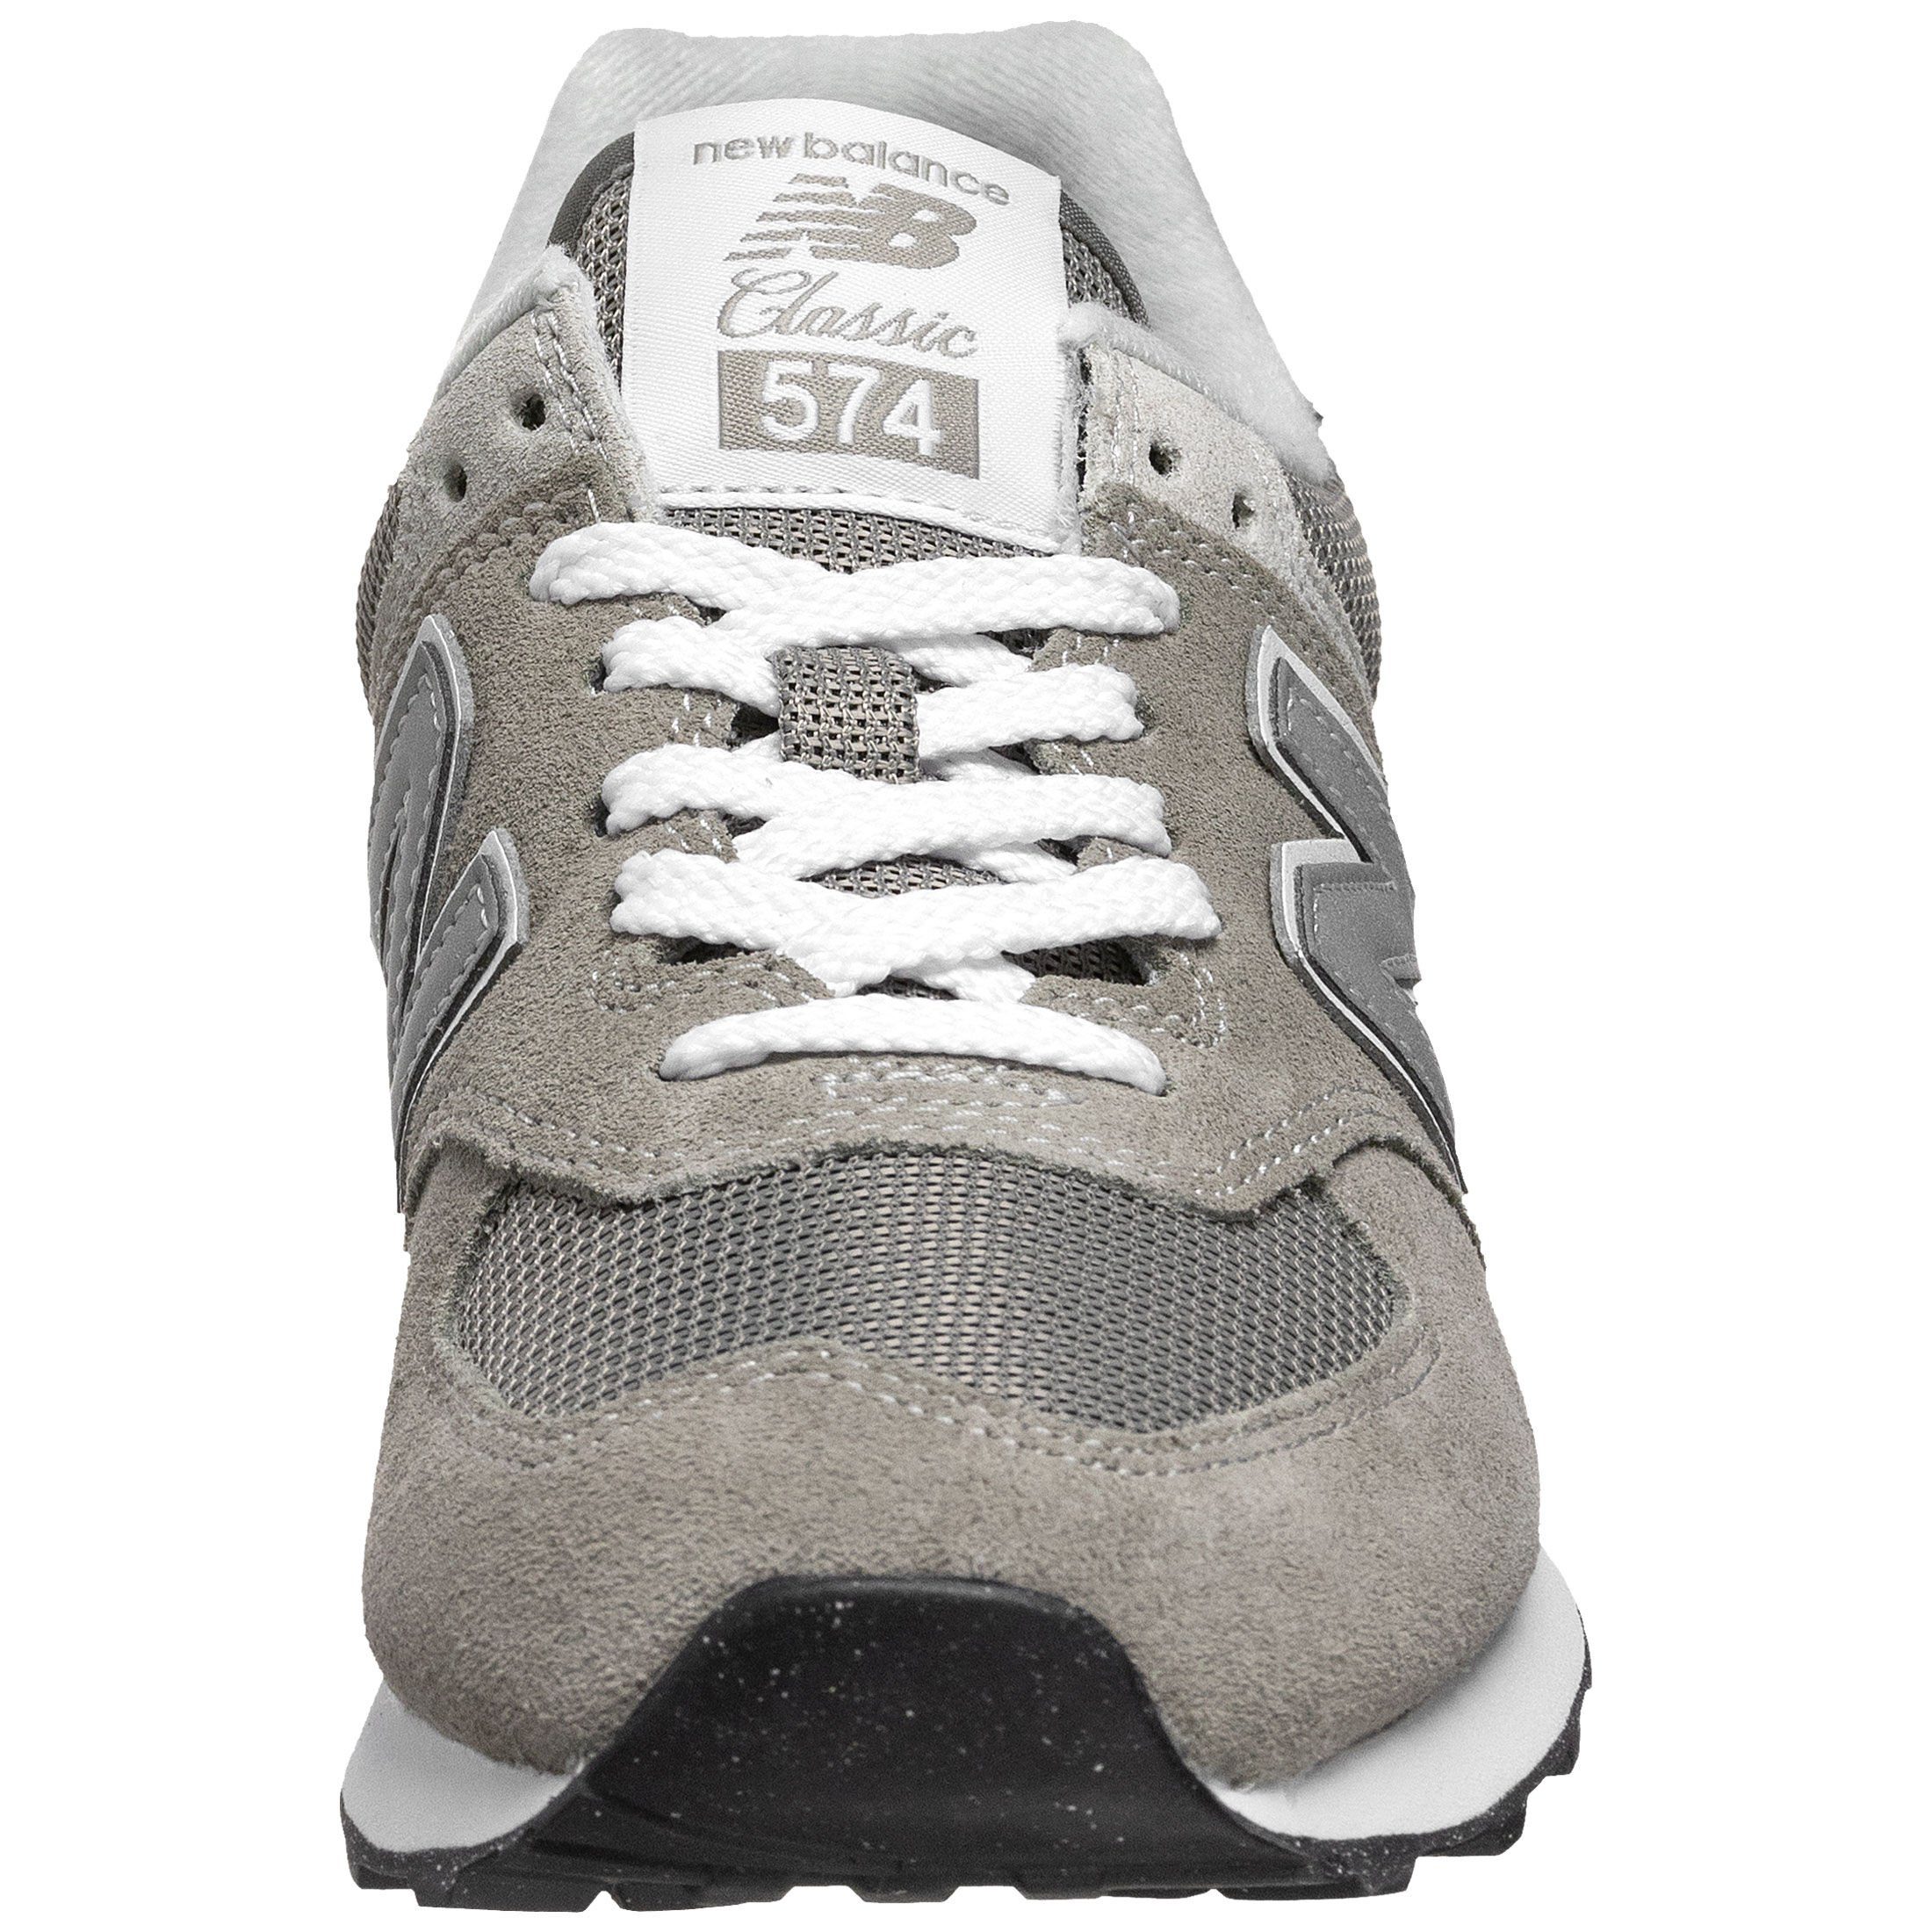 New Damen Sneaker Balance 574 Sneaker grau